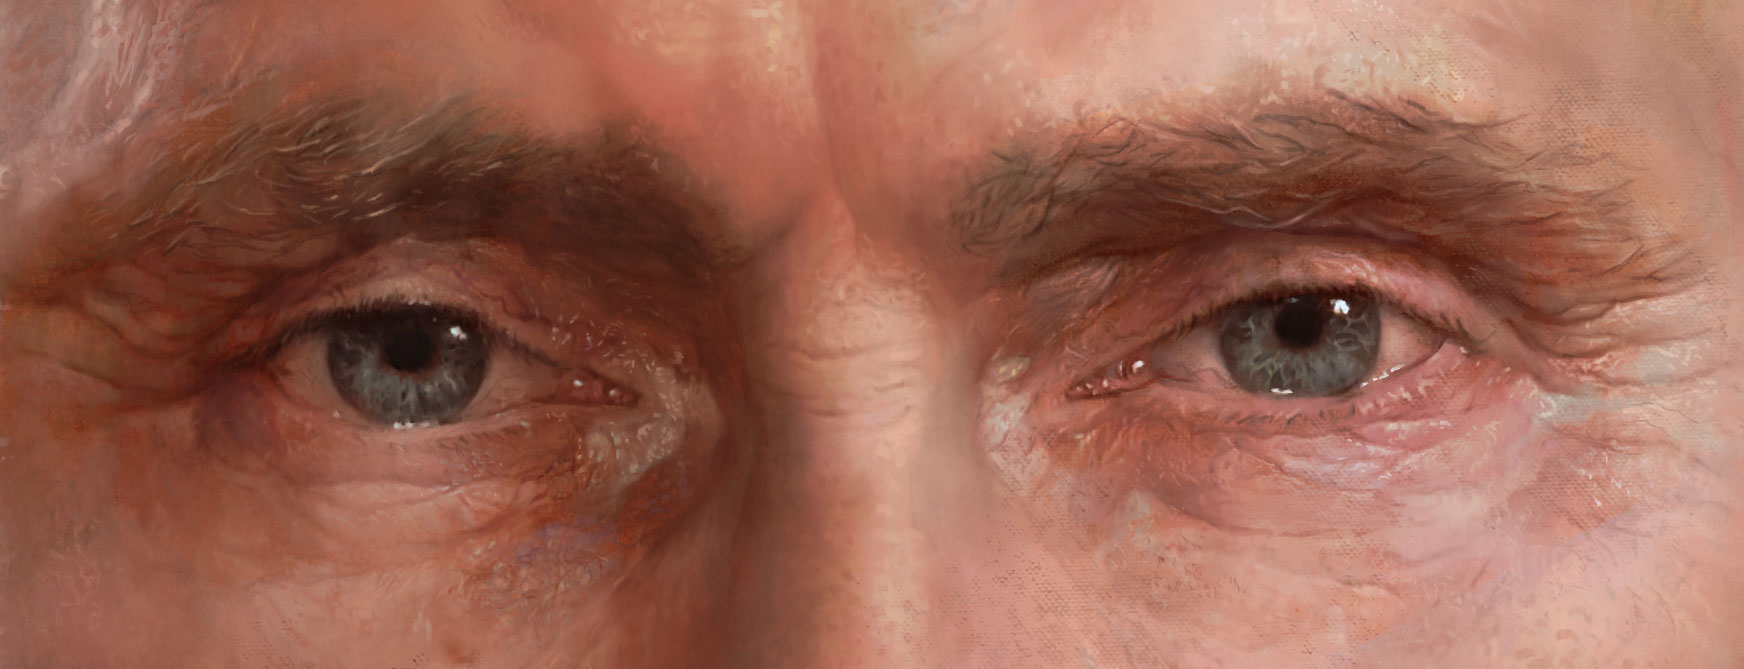 A detail from Sokov's portrait of Vladimir Putin.